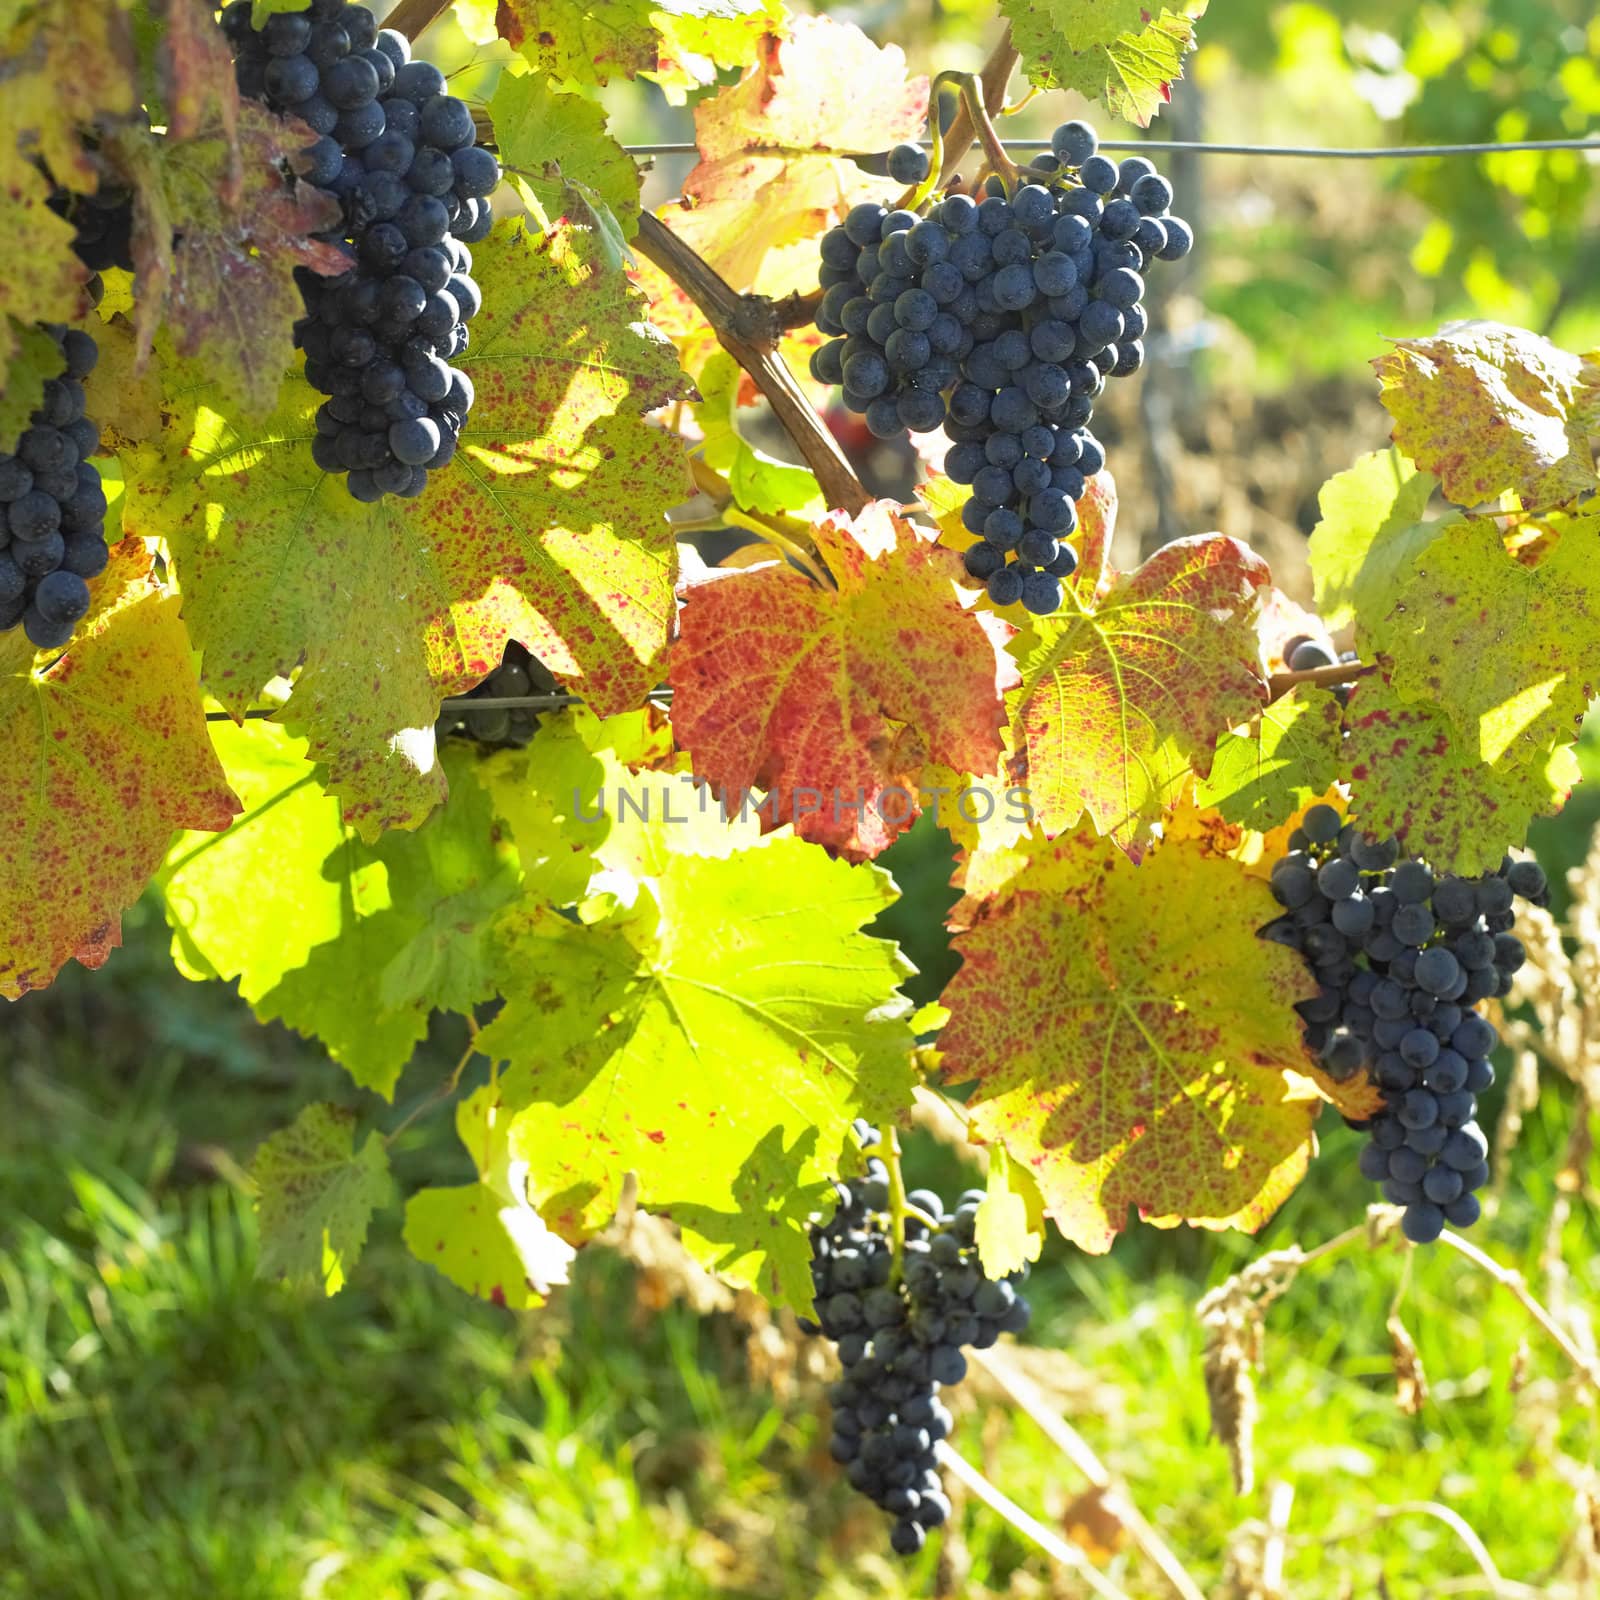 grapevines in vineyard (frankovka), Czech Republic by phbcz